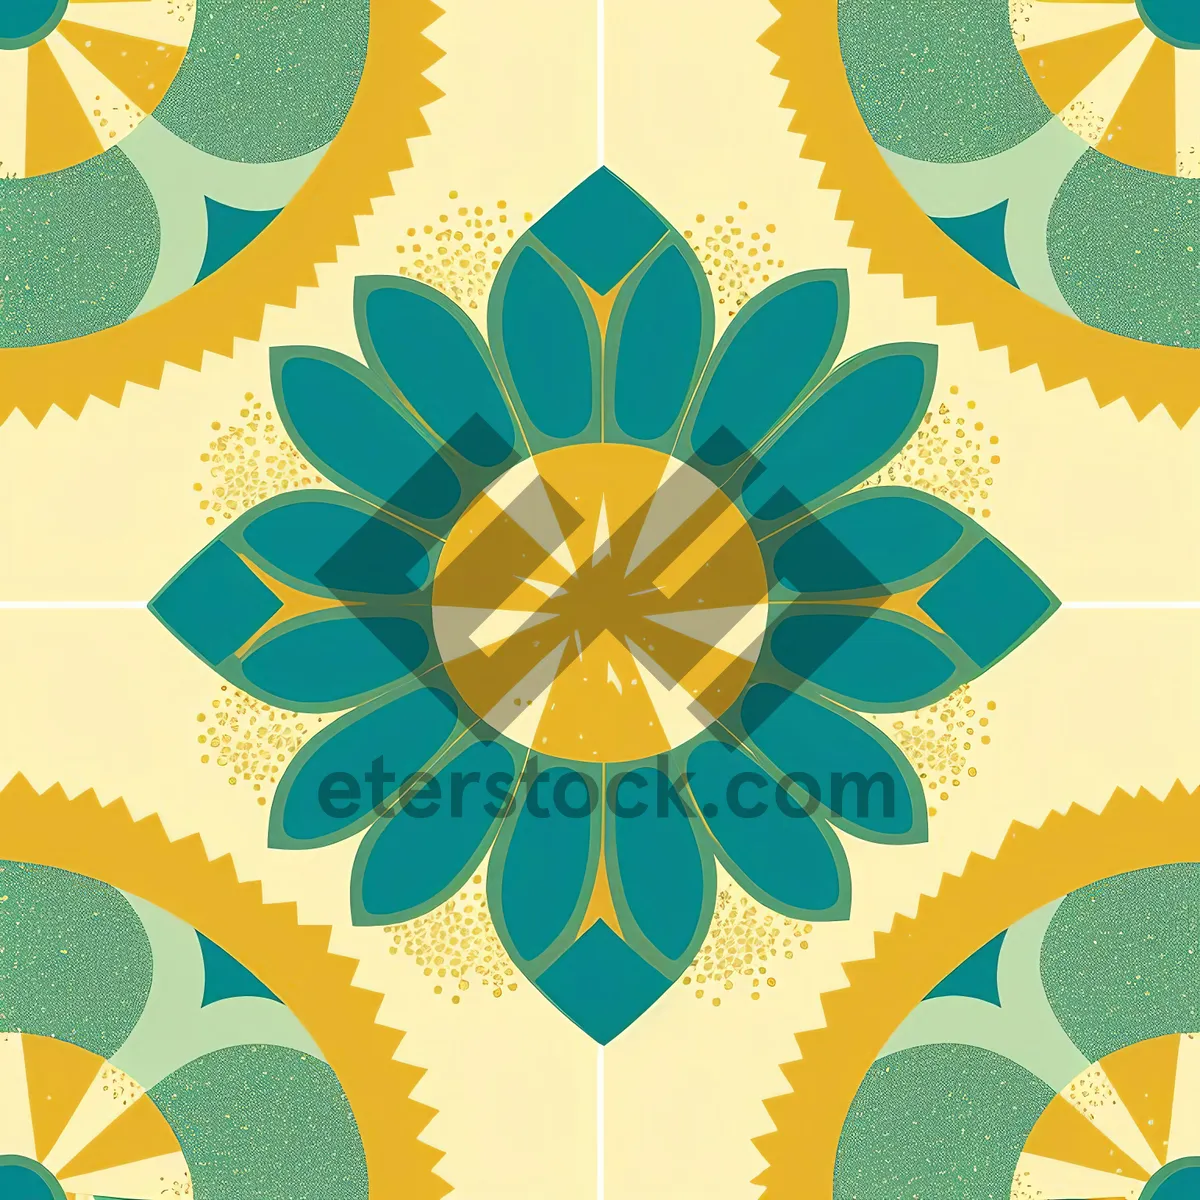 Picture of Floral Mosaic Tile Design: Retro Spring Ornate Decor